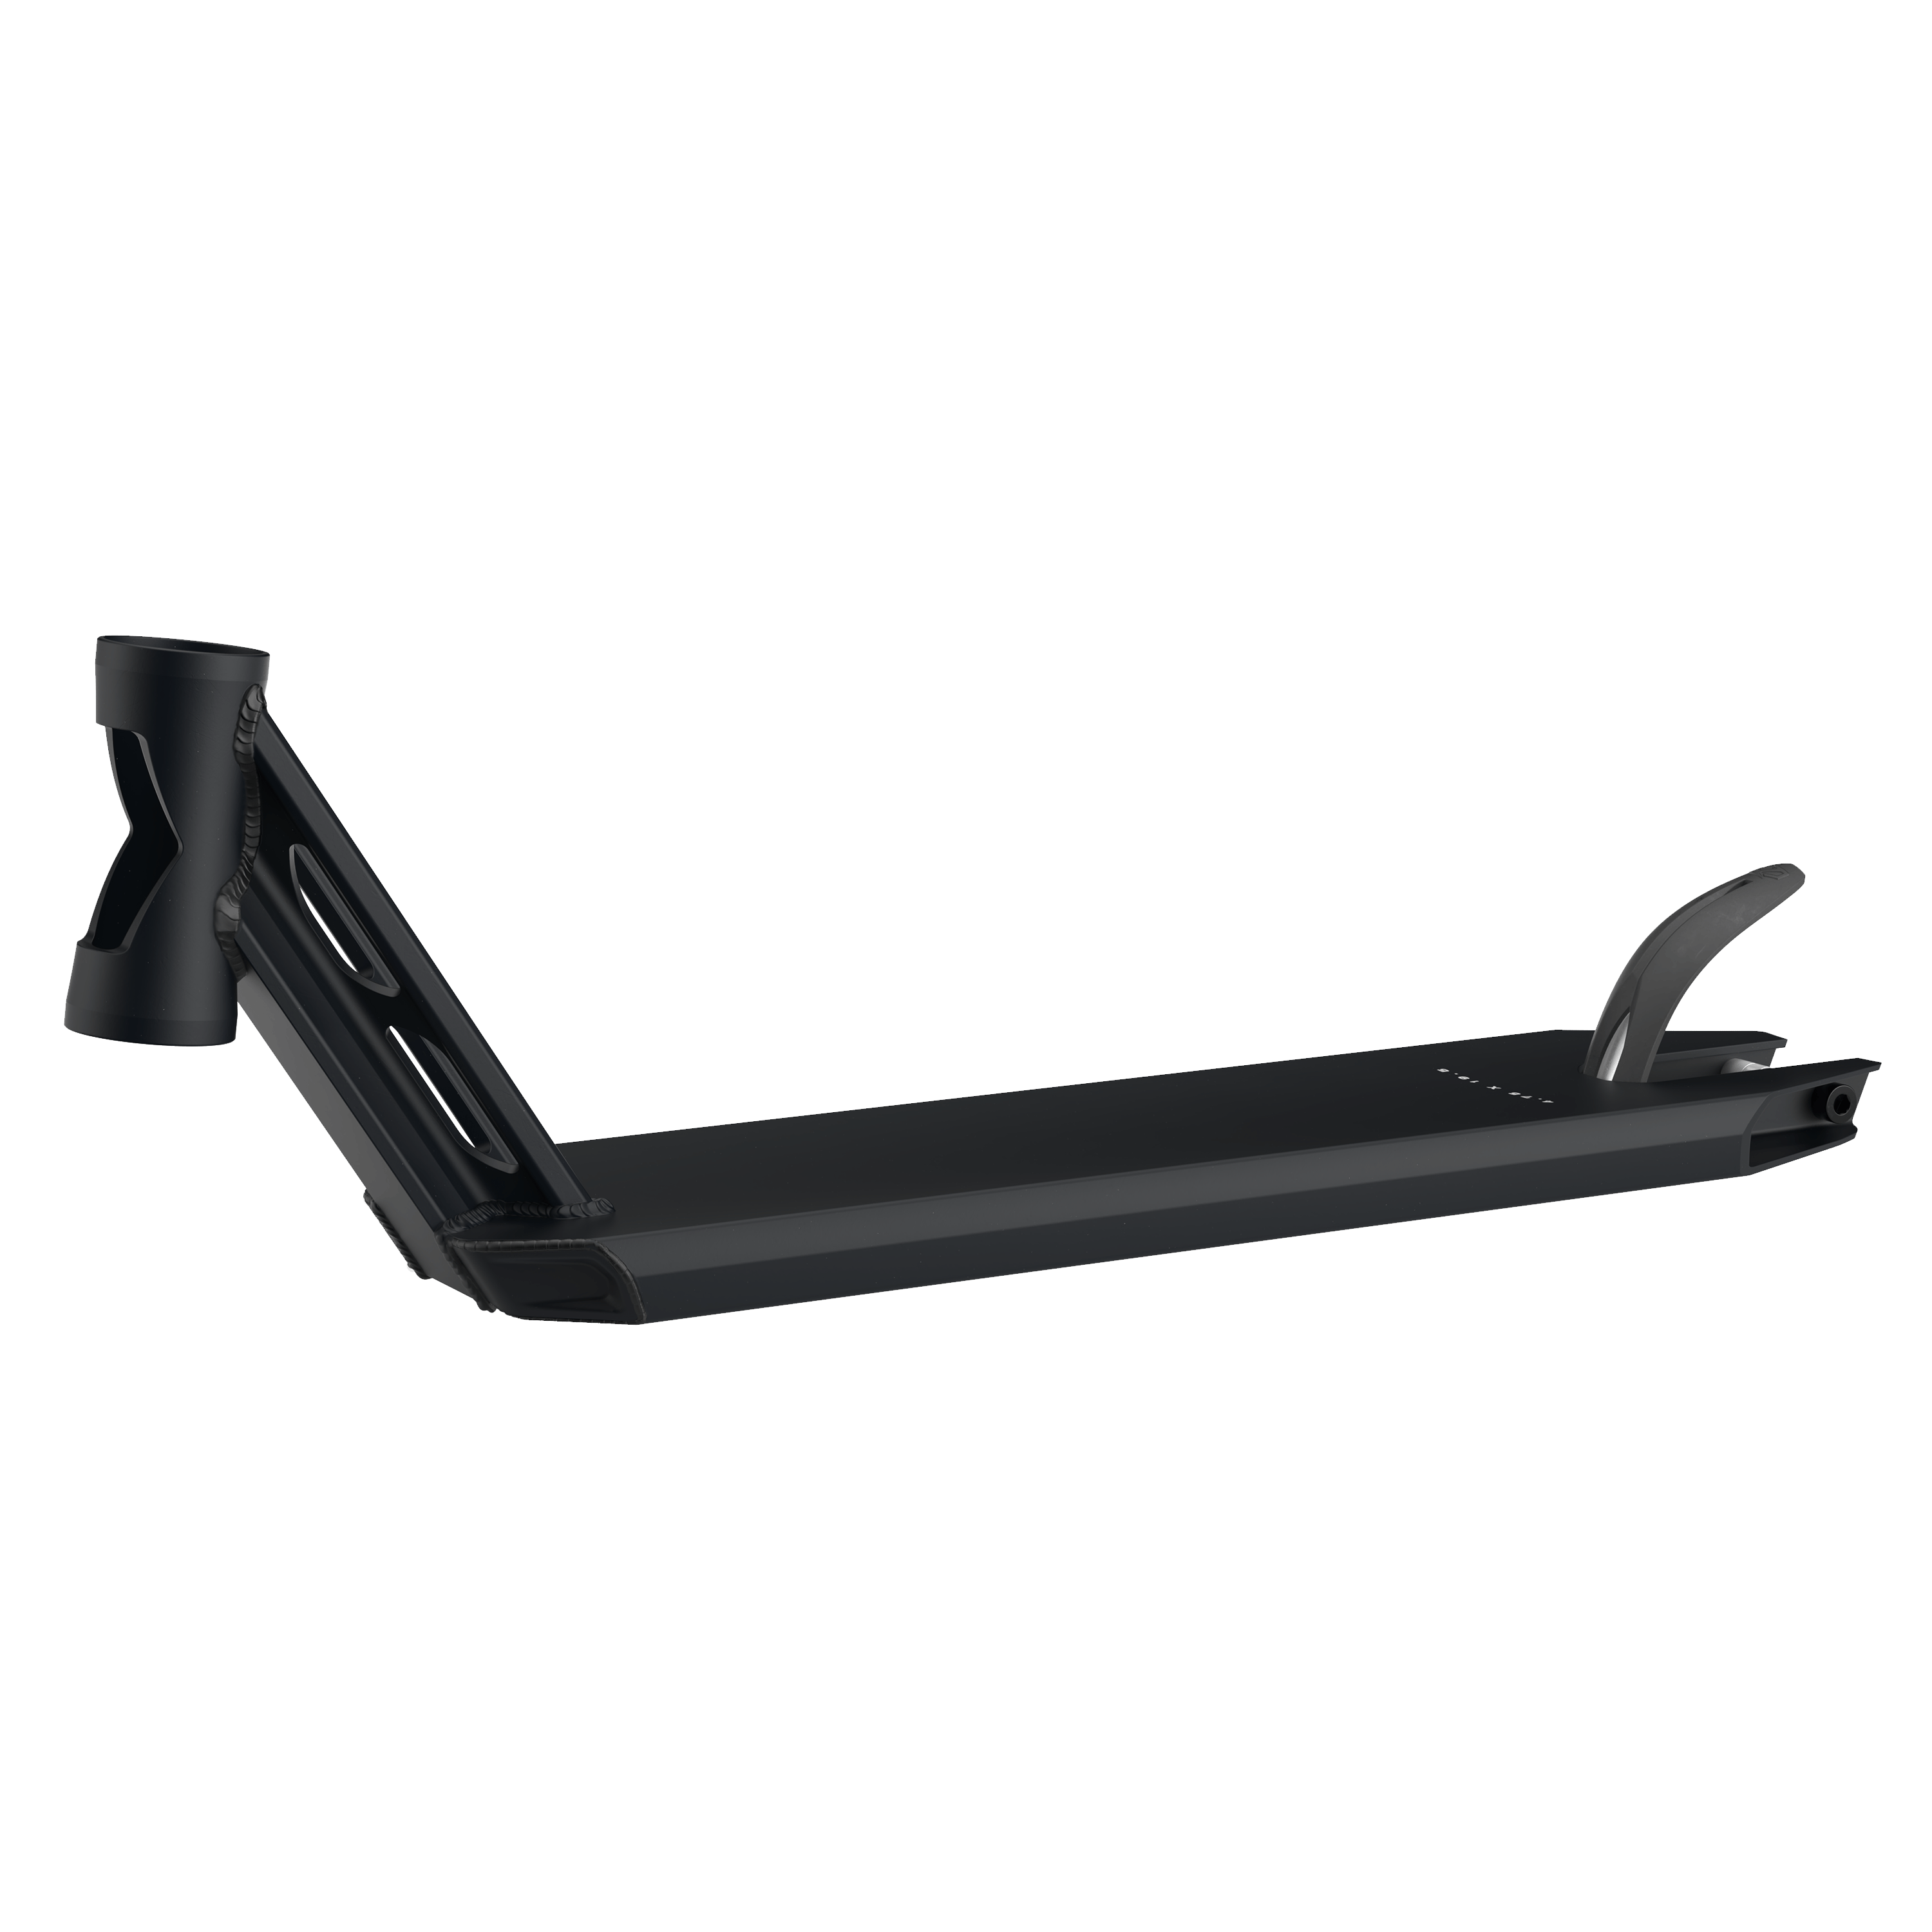 APEX 5" Wide Angled 580mm Deck Black 